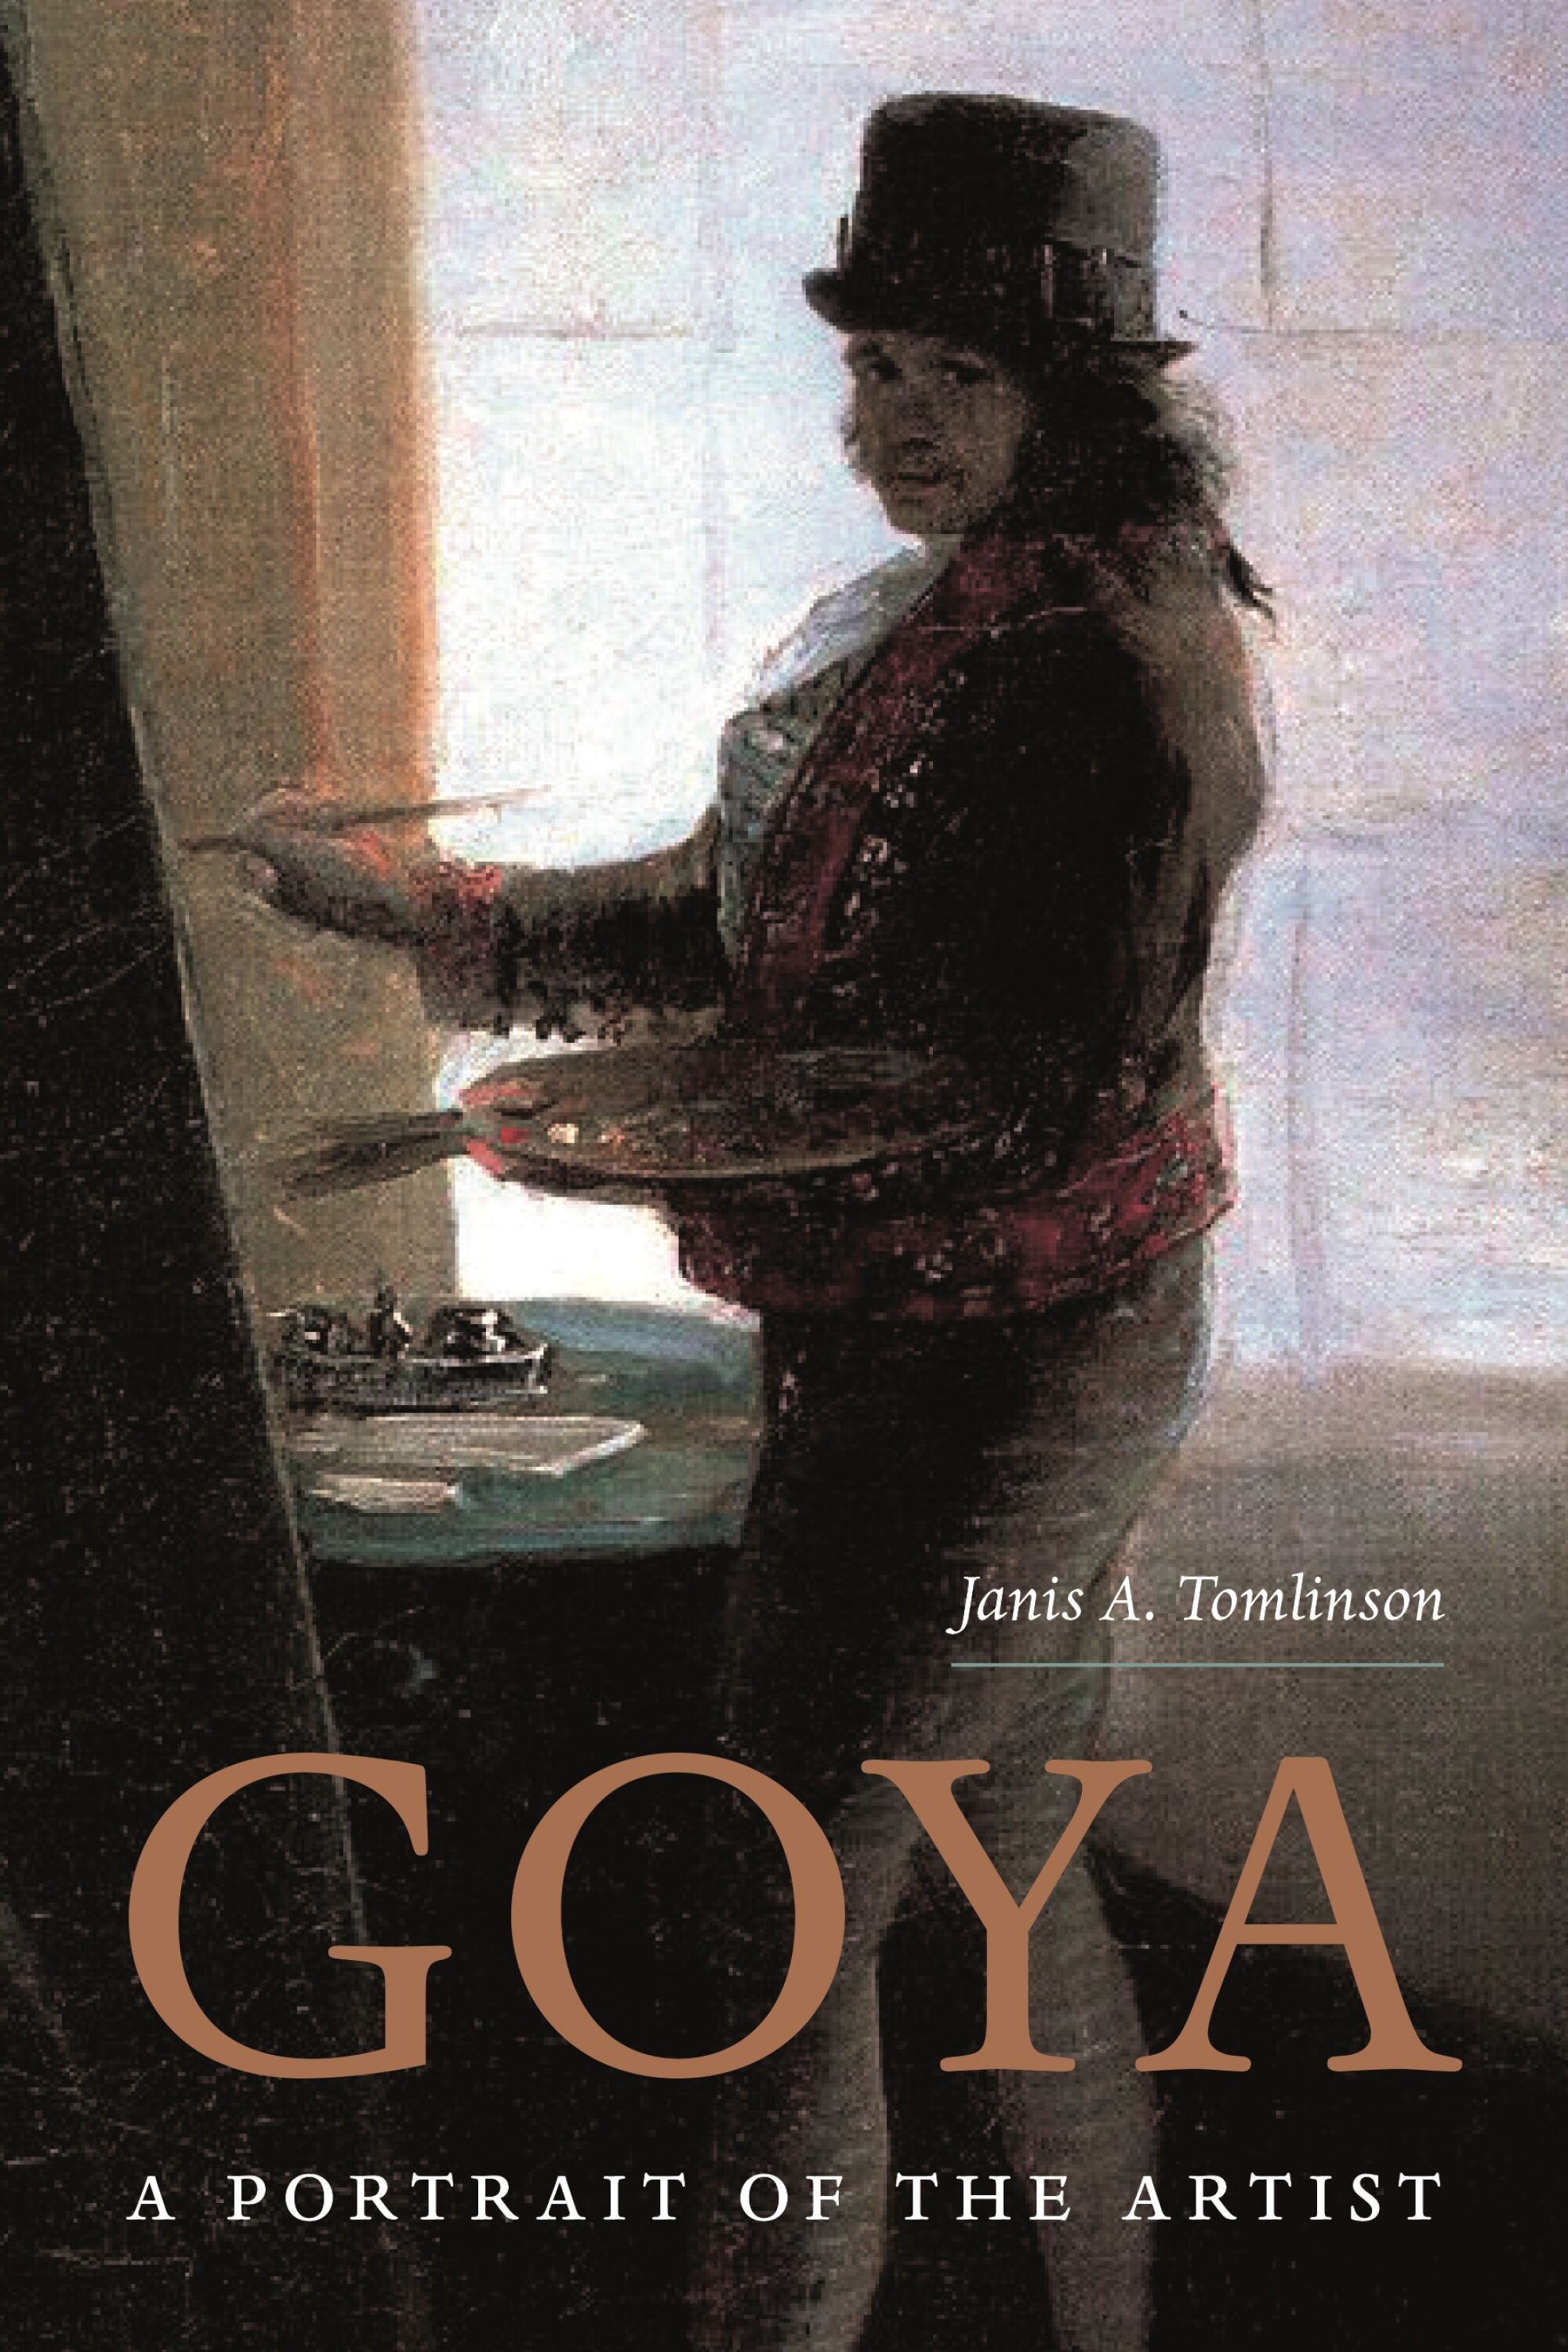 Janis A. Tomlinson, "Goya: A Portrait of the Artist"